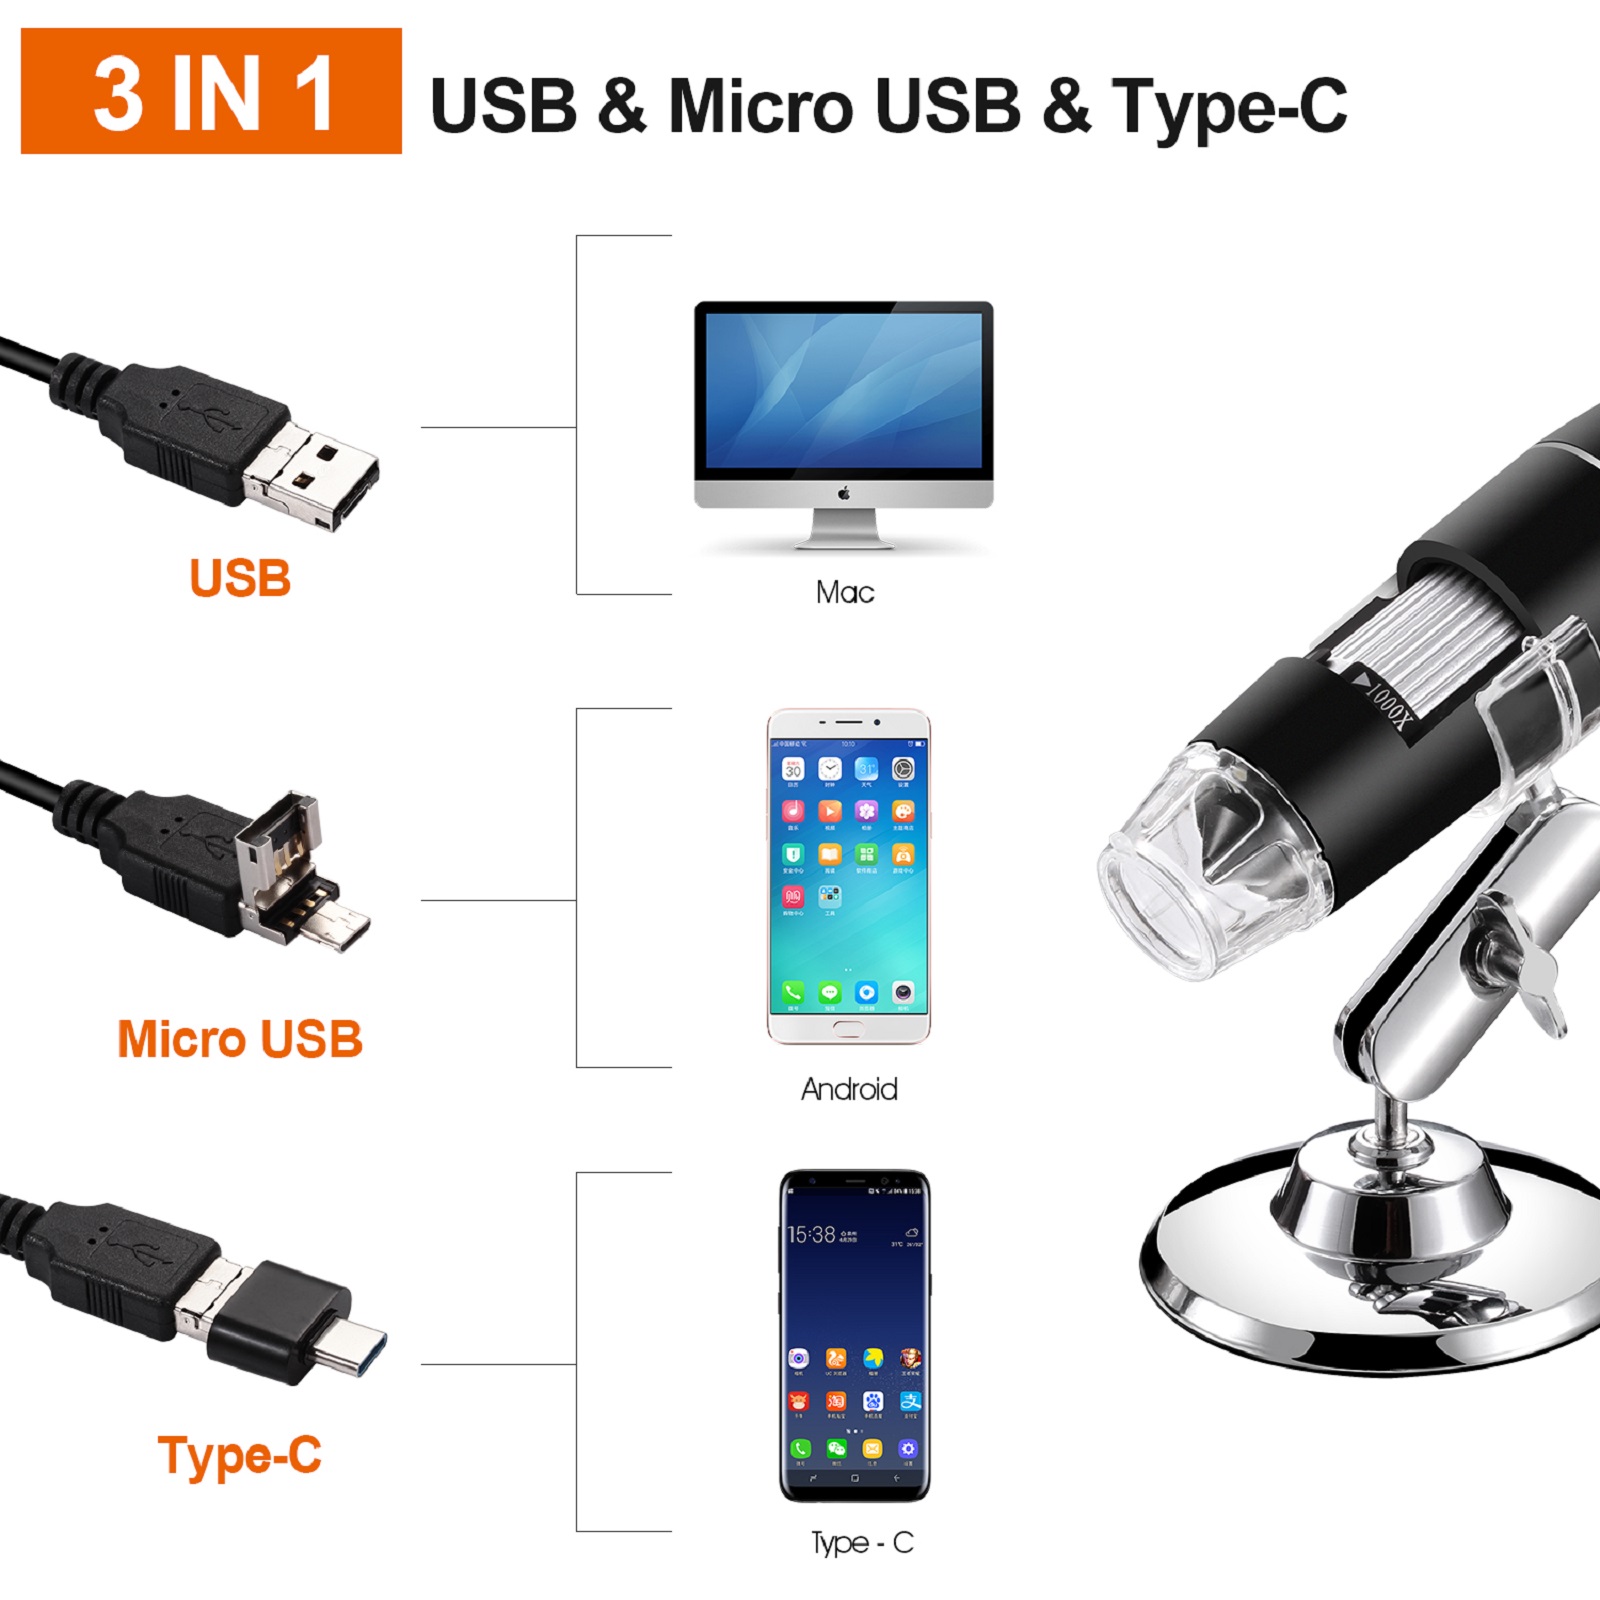 Mini Camera 8 LED Digital Microscope with Metal Stand Mini Handheld Endoscope Inspection Camera 1000x Magnification Endoscope